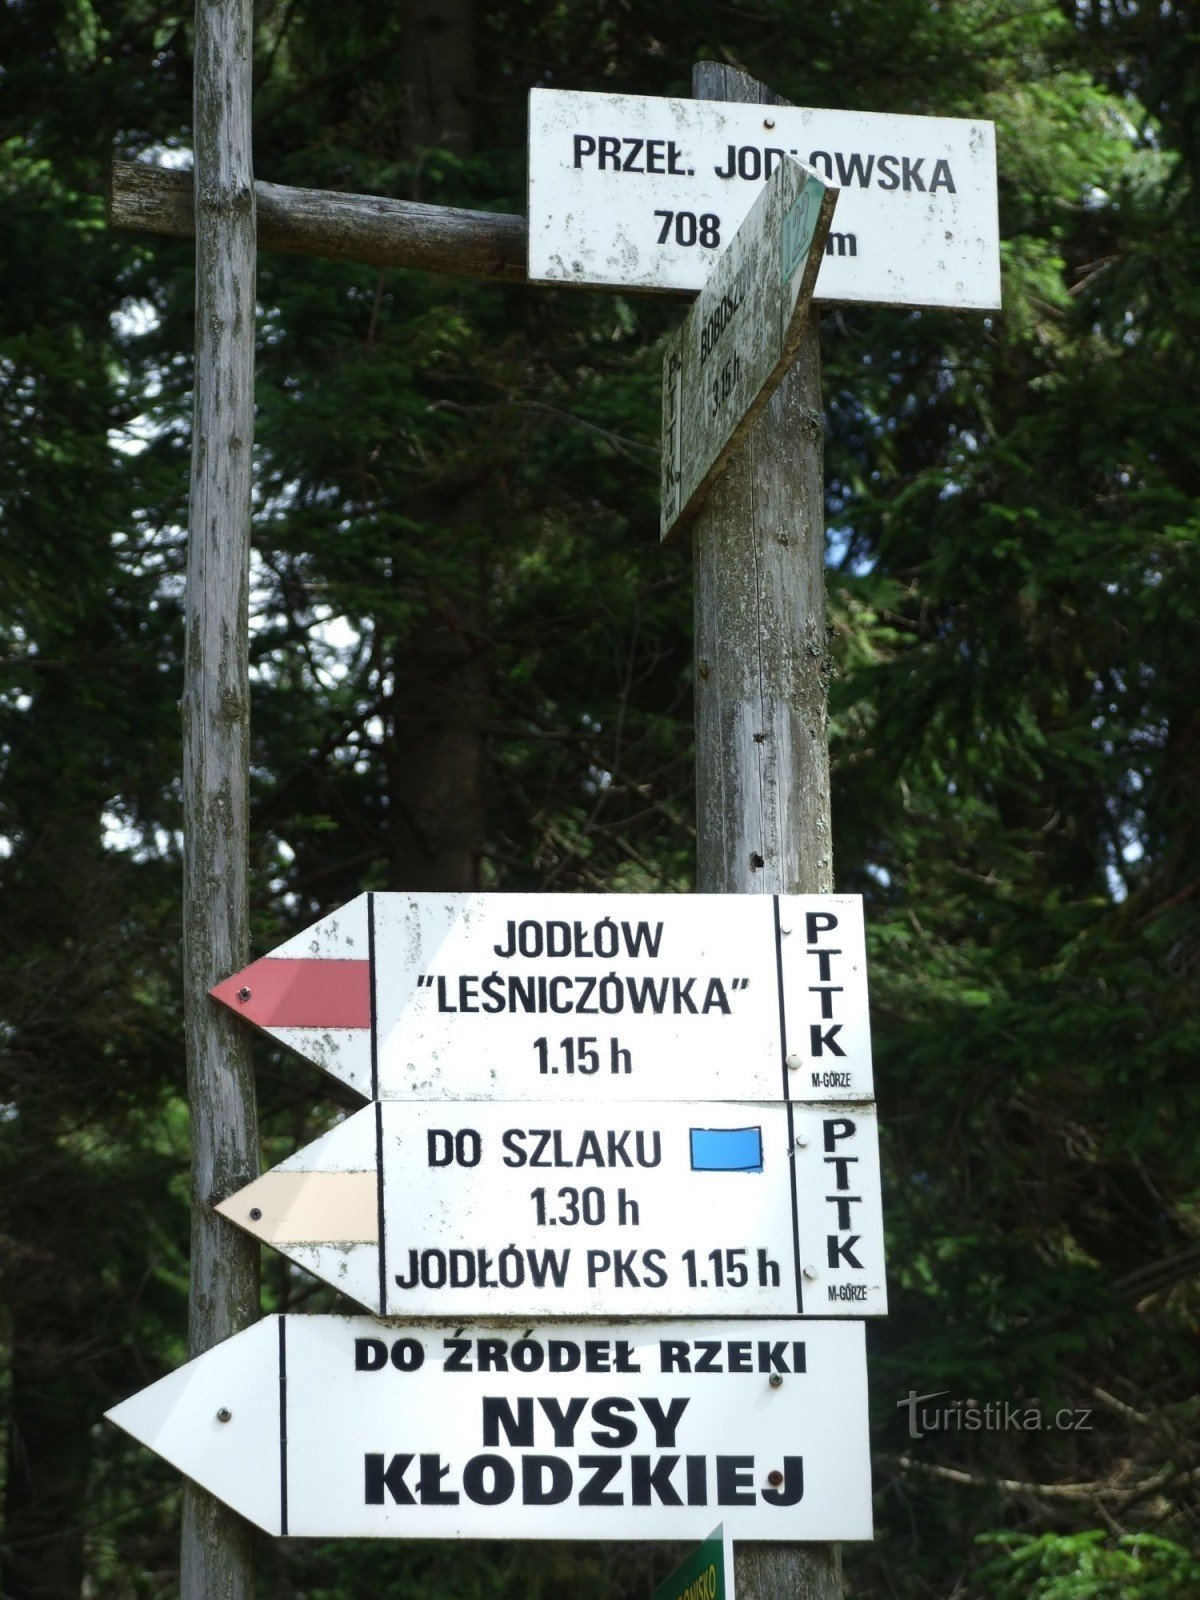 Przel. Jodlowska, guide polonaise